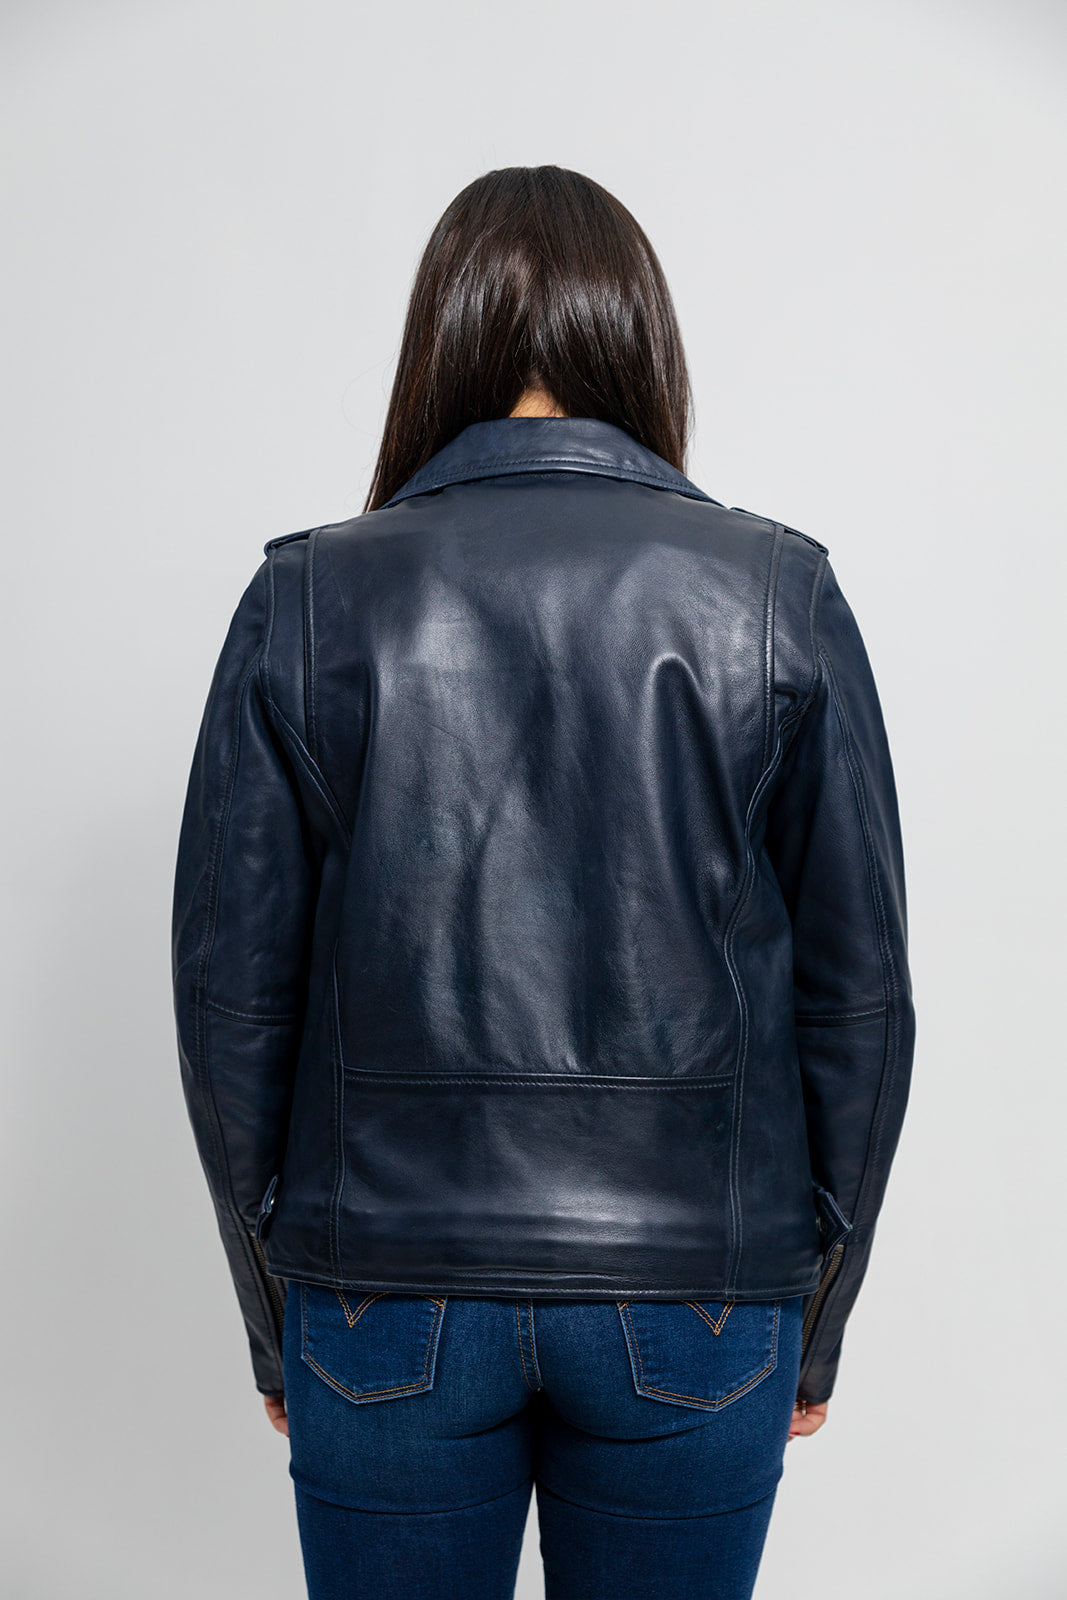 Rebel Womens Fashion Leather Jacket Navy Blue Women's Leather Jacket Whet Blu NYC   